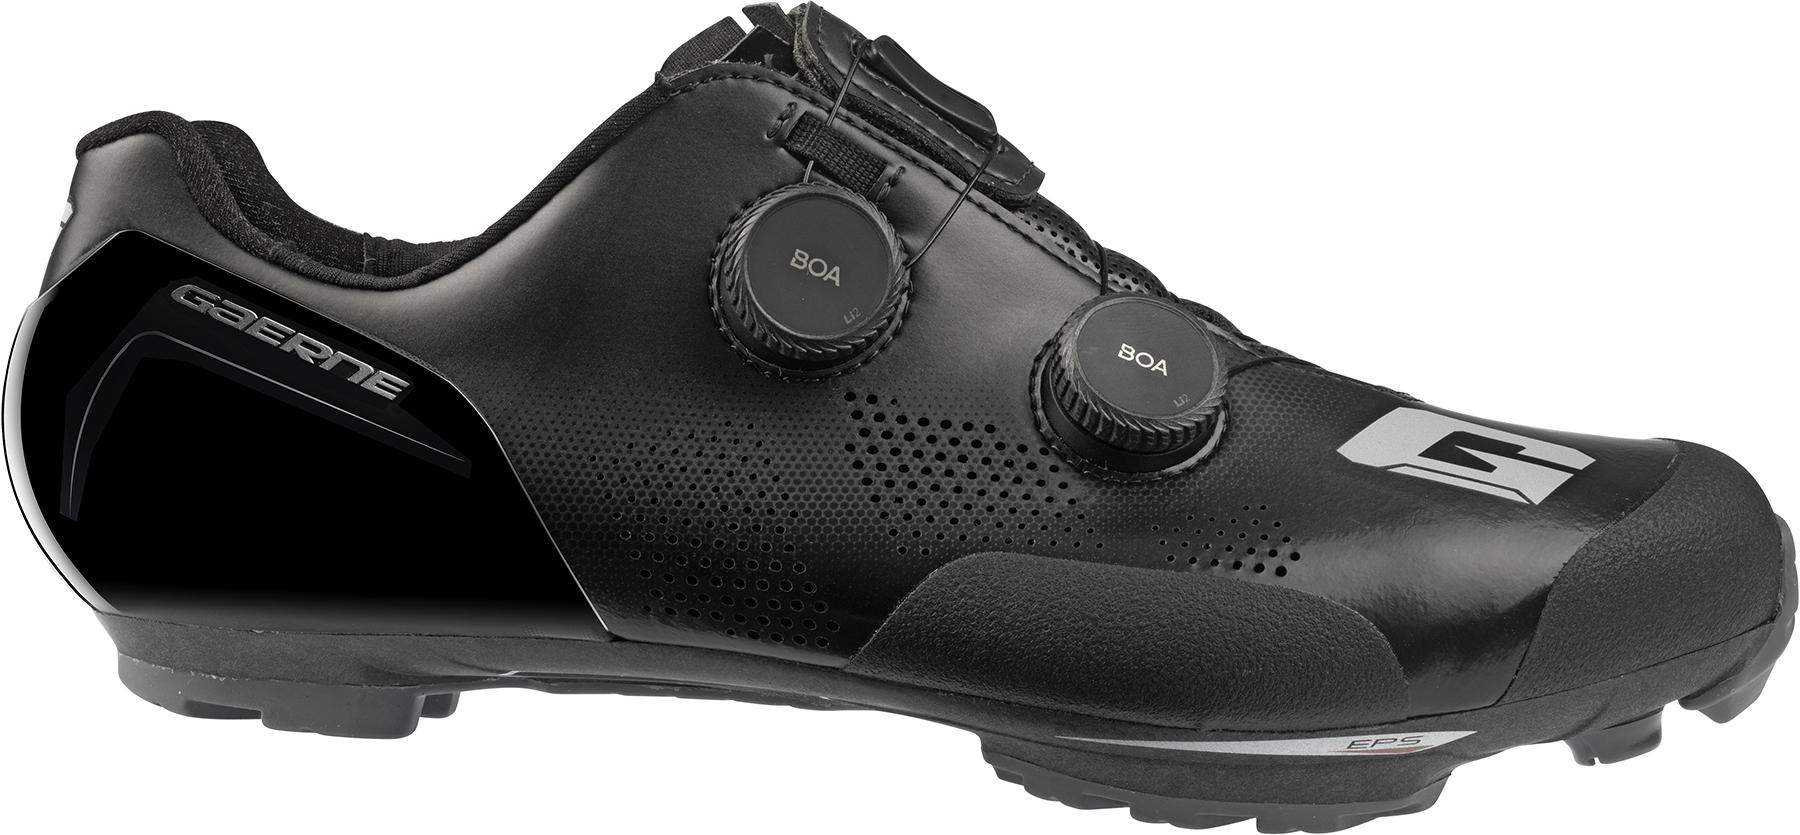 Gaerne Carbon G. Snx Shoes  Black